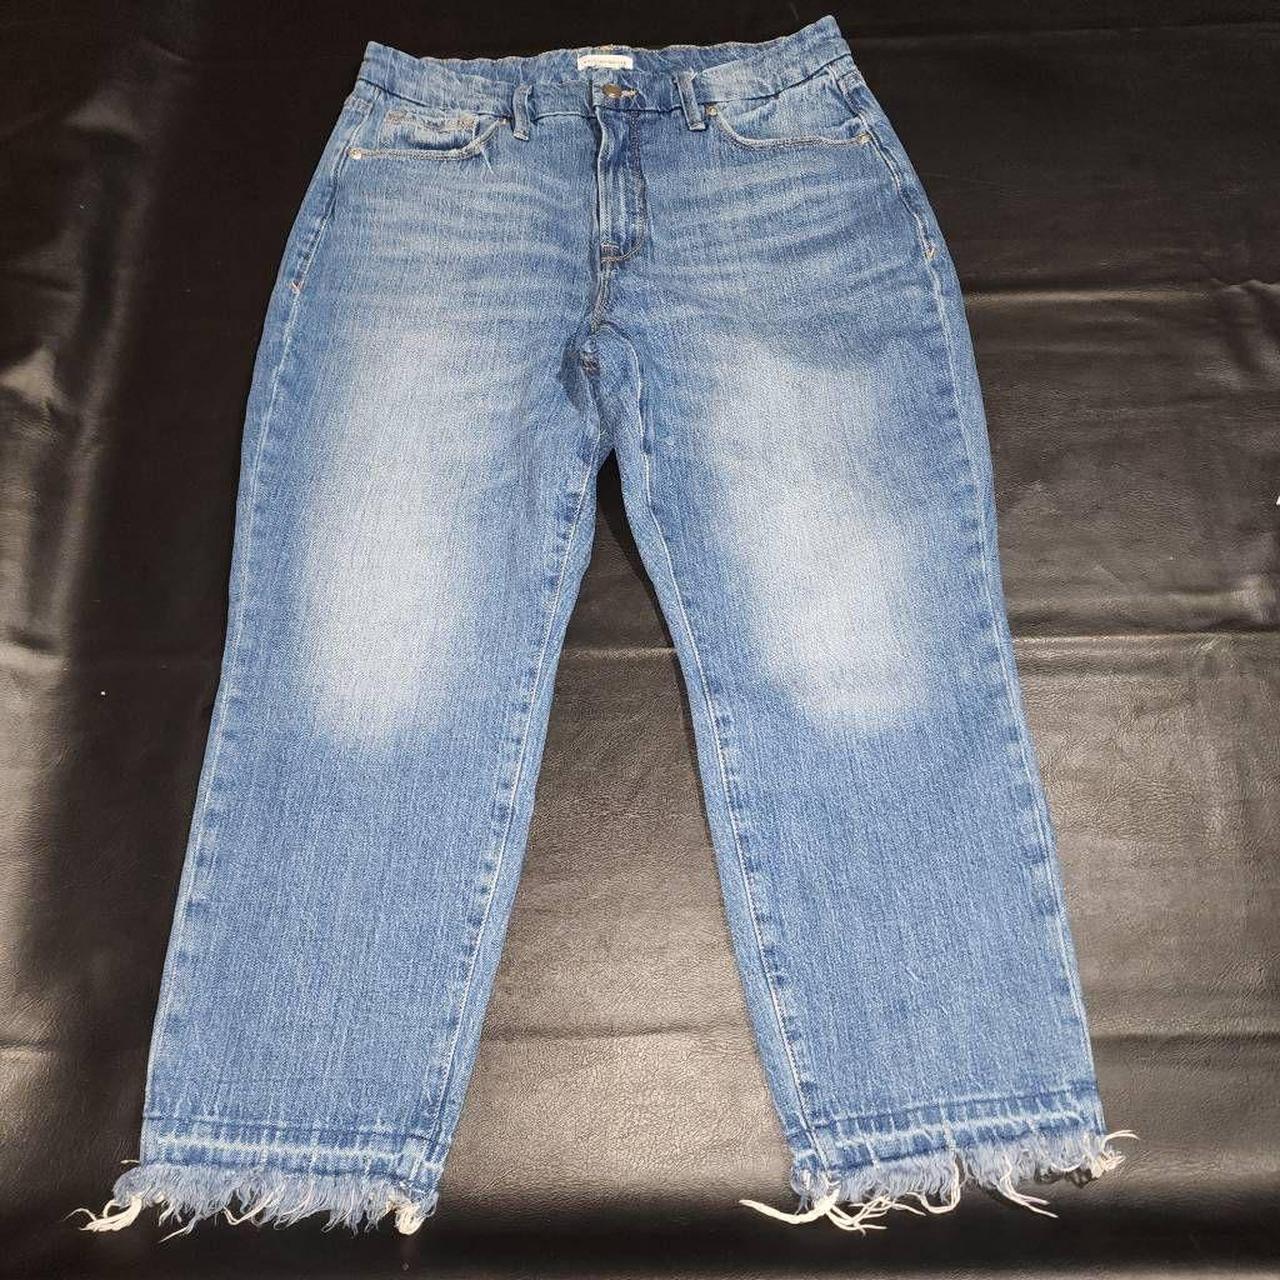 Good American Womens Capri Cropped Jeans 10/30 10 - Depop